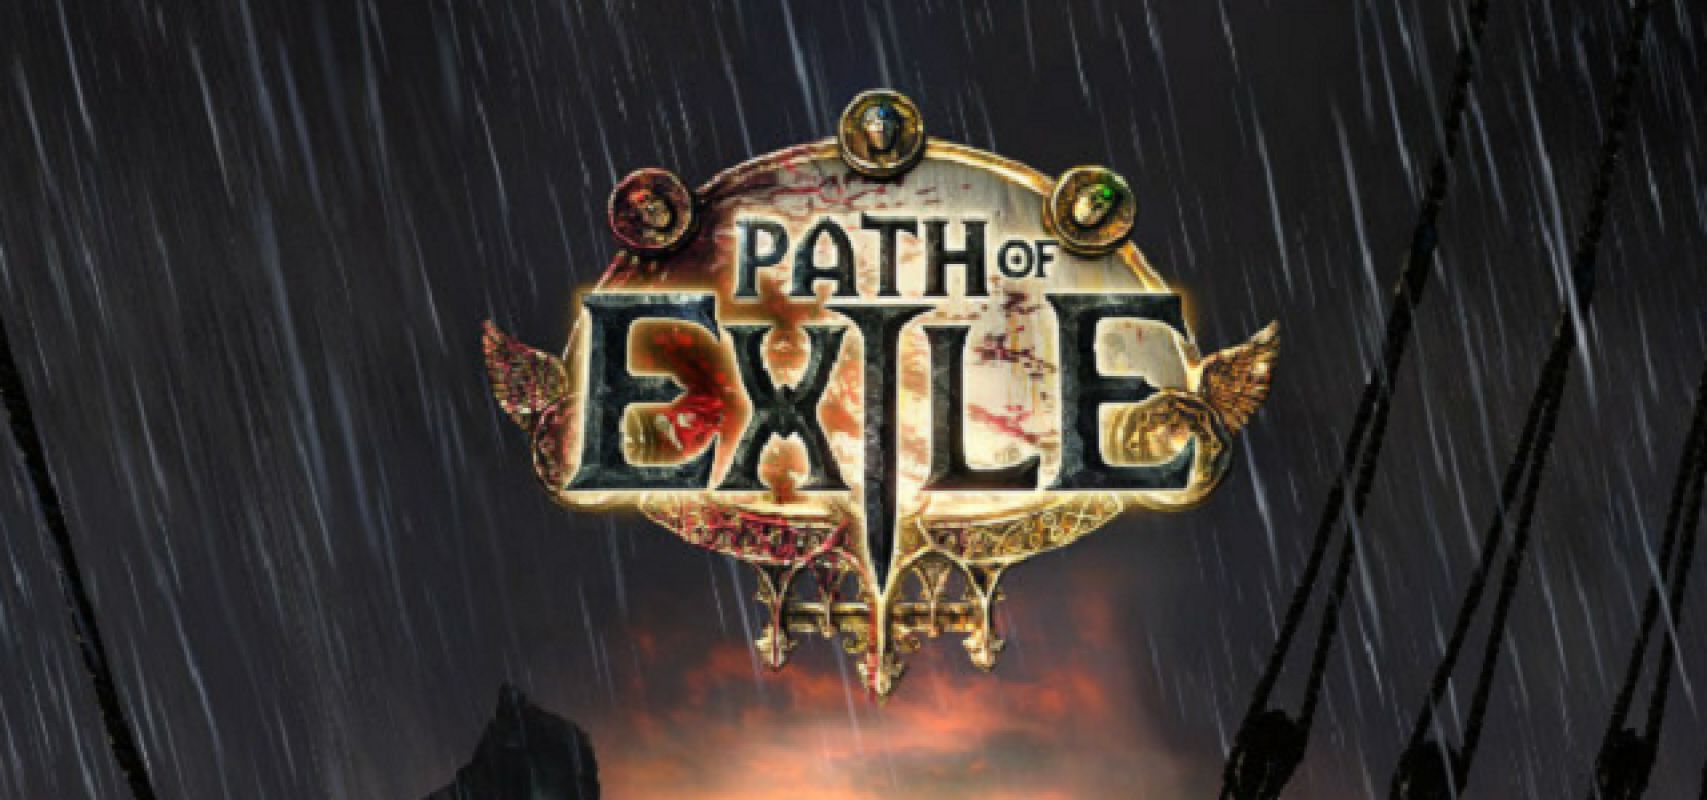 Path of Exile —  Анонс запуска Steam-версии игры для стран СНГ